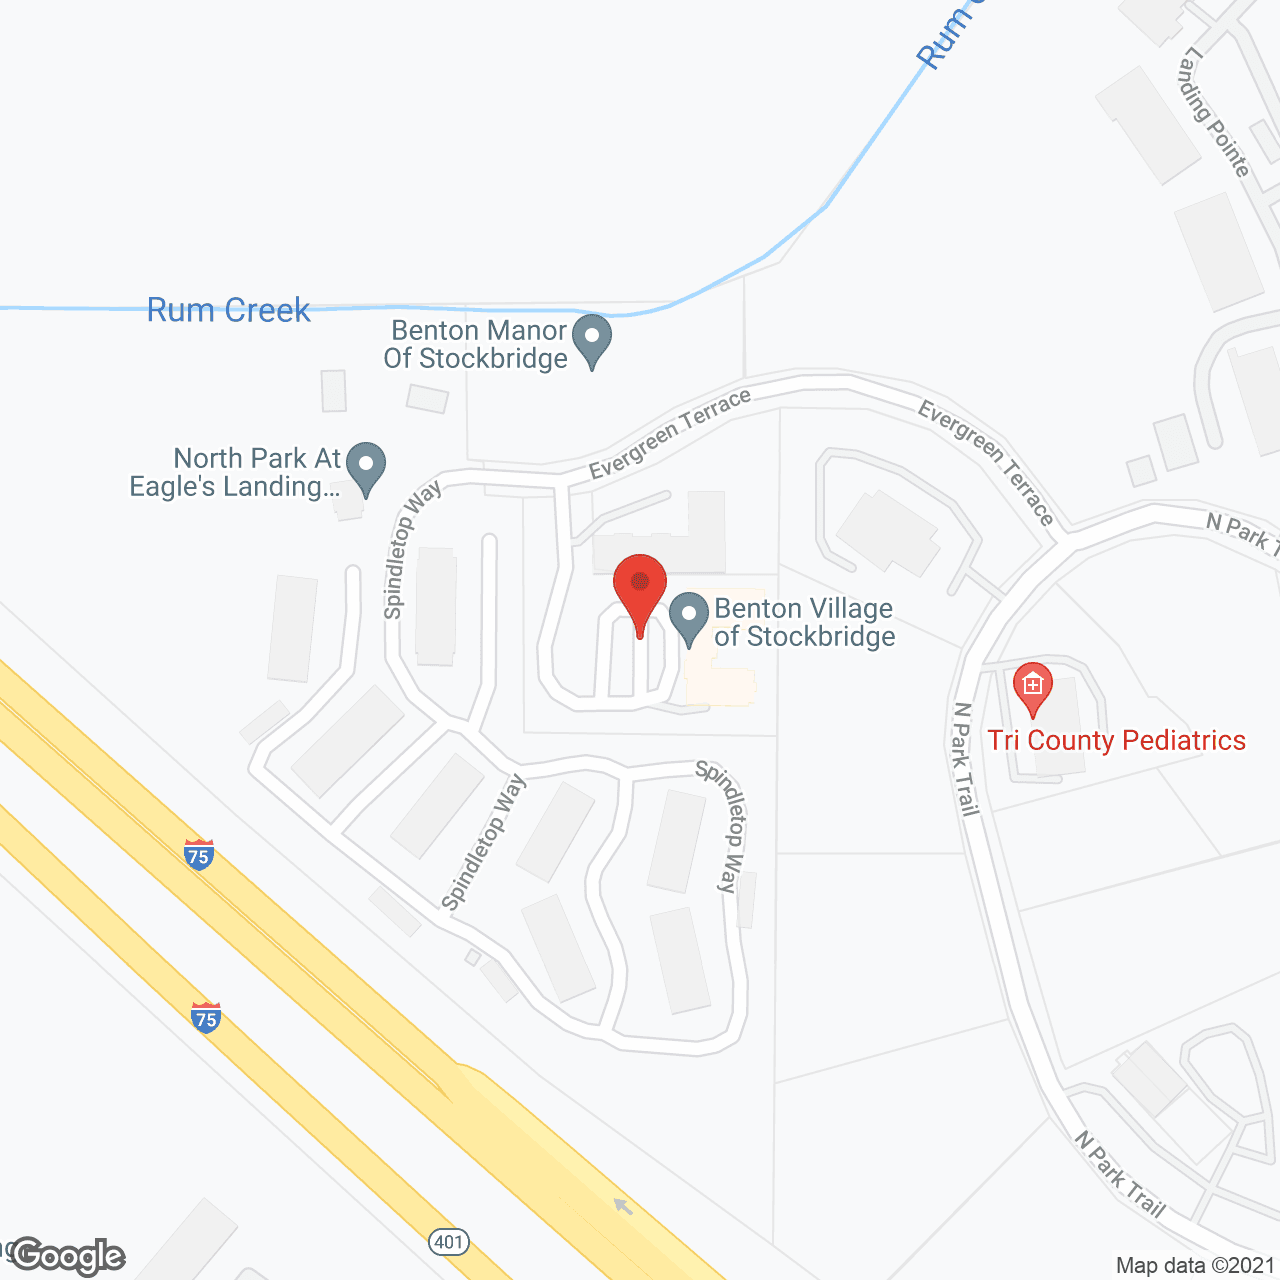 Benton Village of Stockbridge in google map